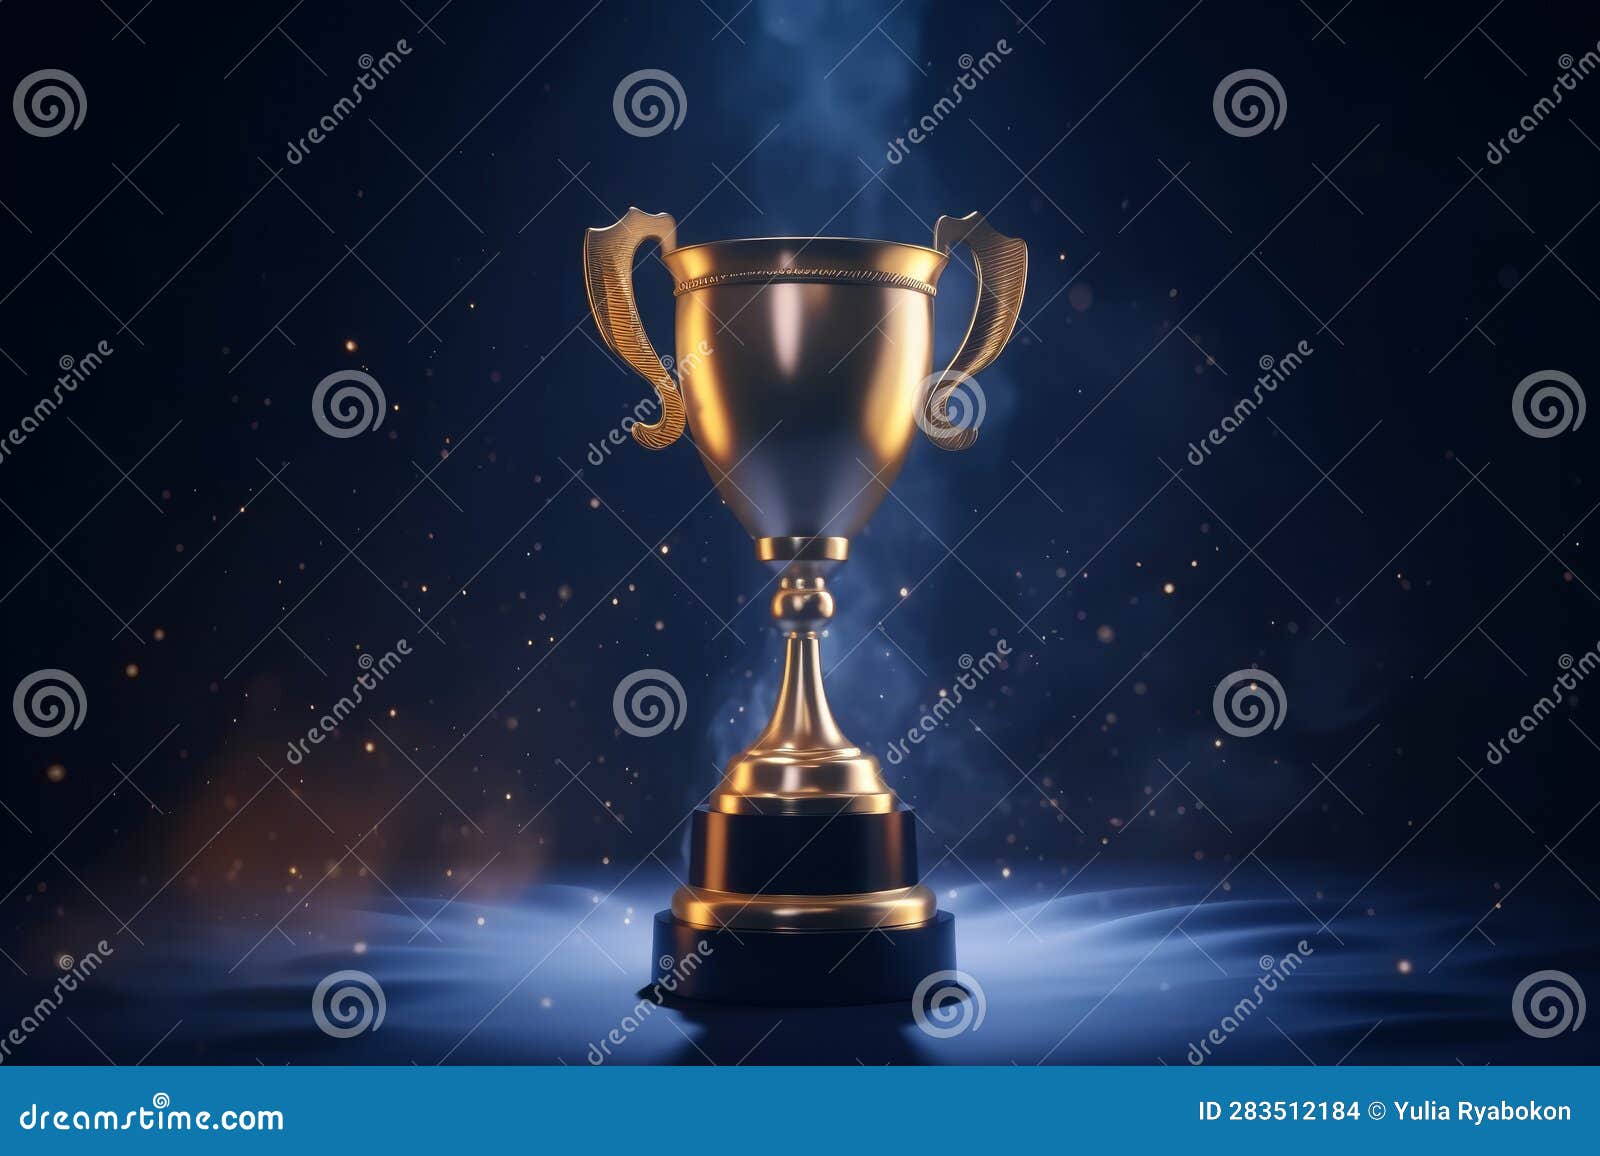 golden winners trophy cup. generate ai